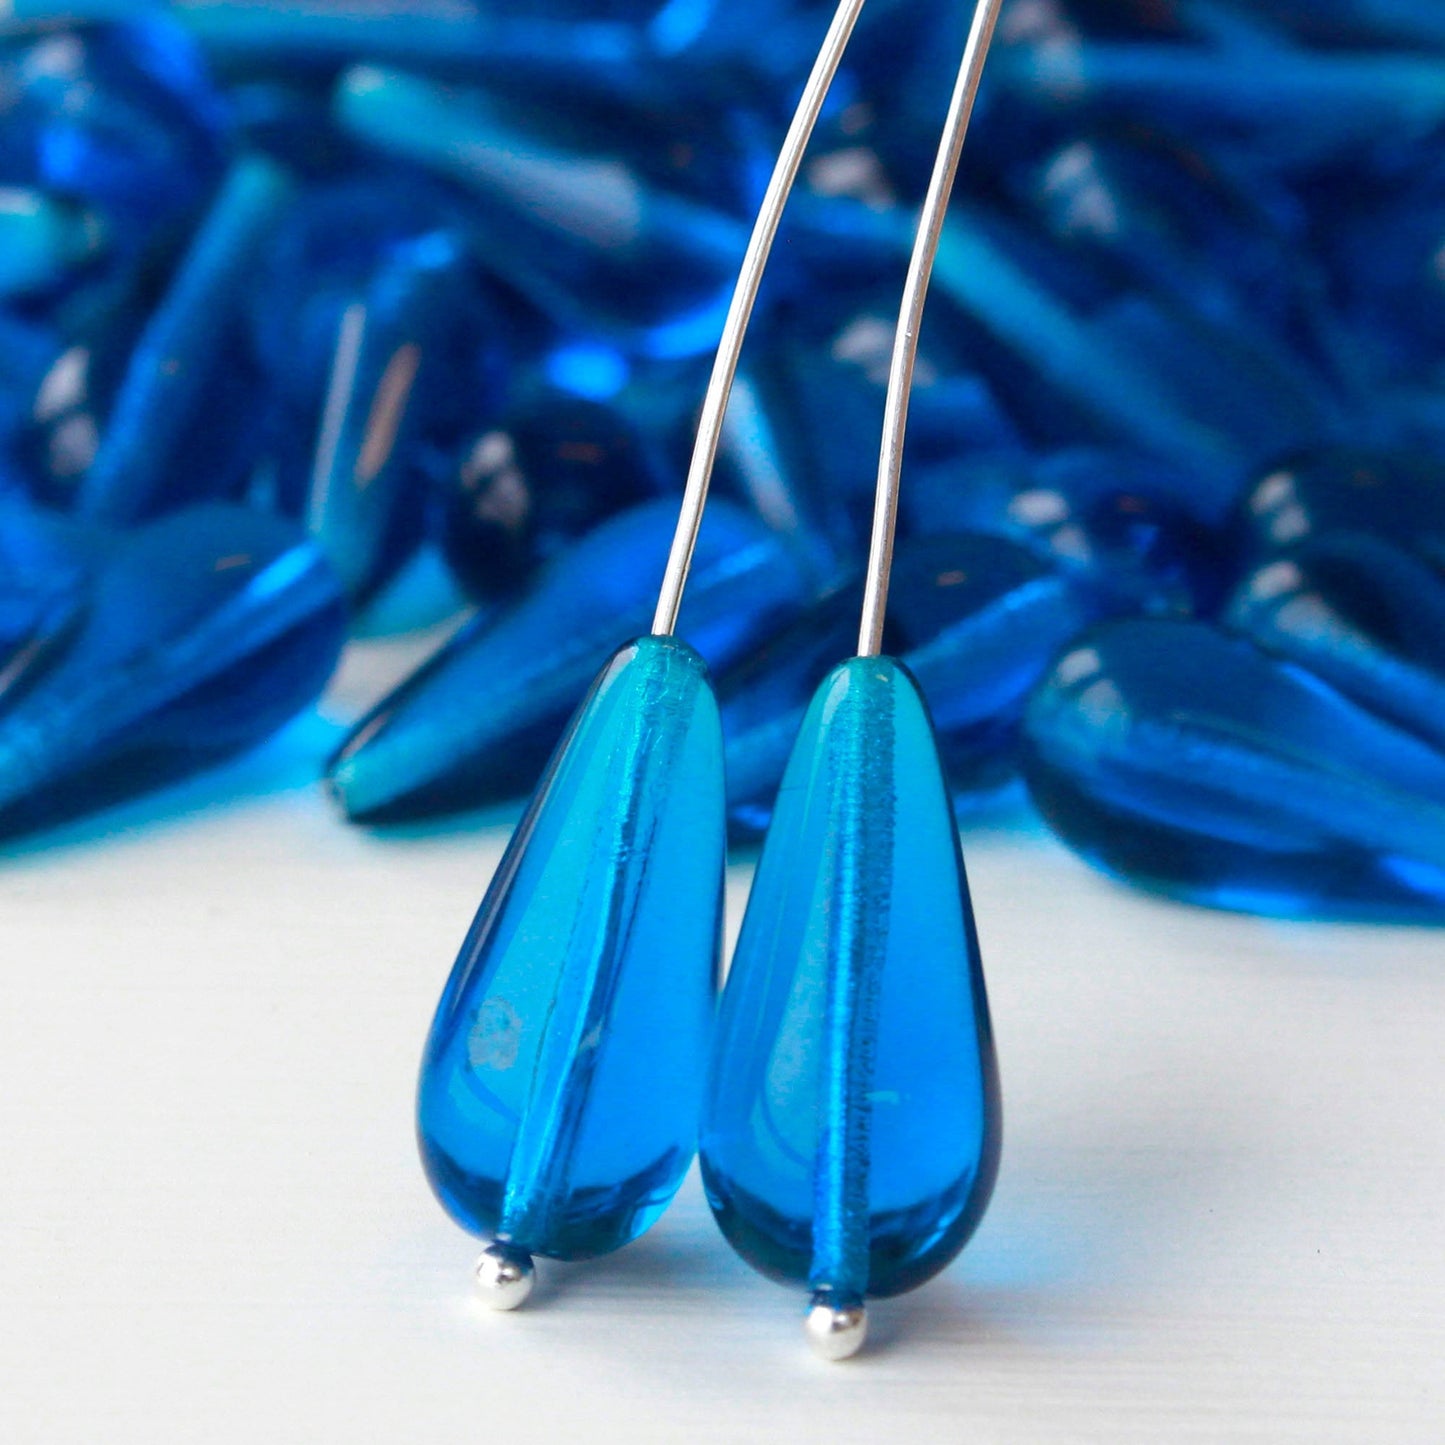 9x20mm Glass Teardrop Beads - Capri Blue - 20 Beads